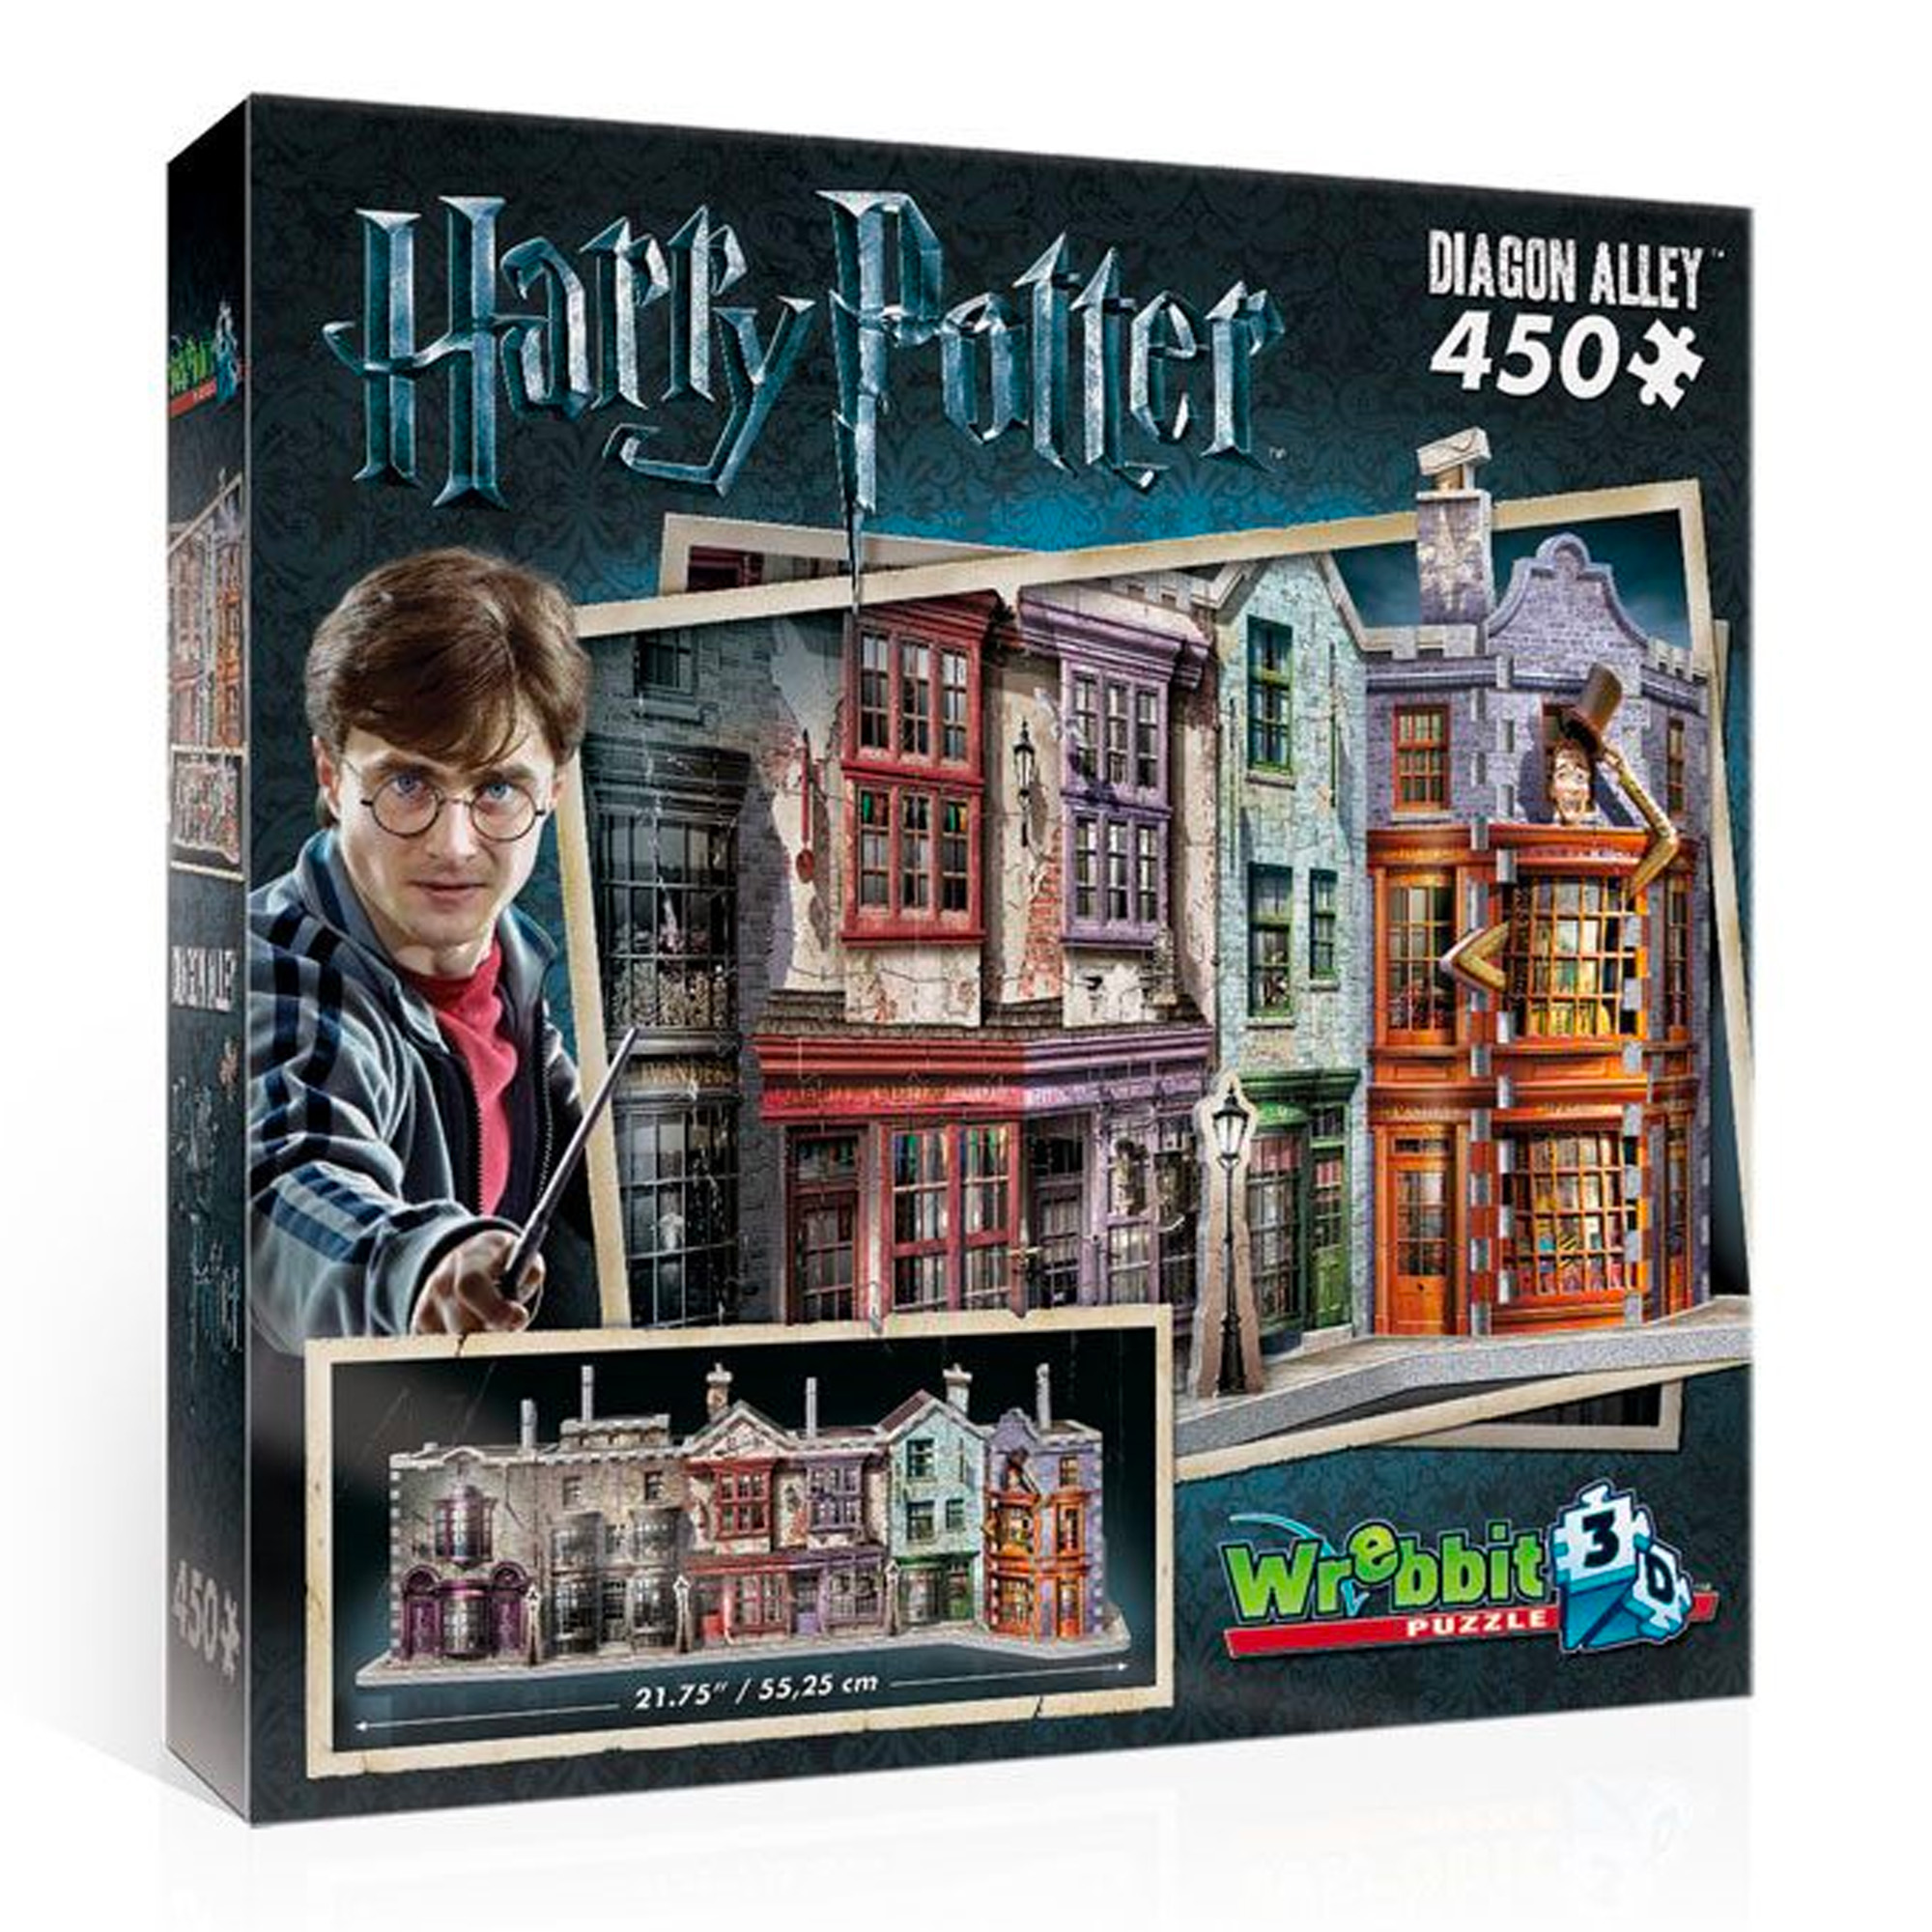 3D Puzzle Winkelgasse - Harry Potter